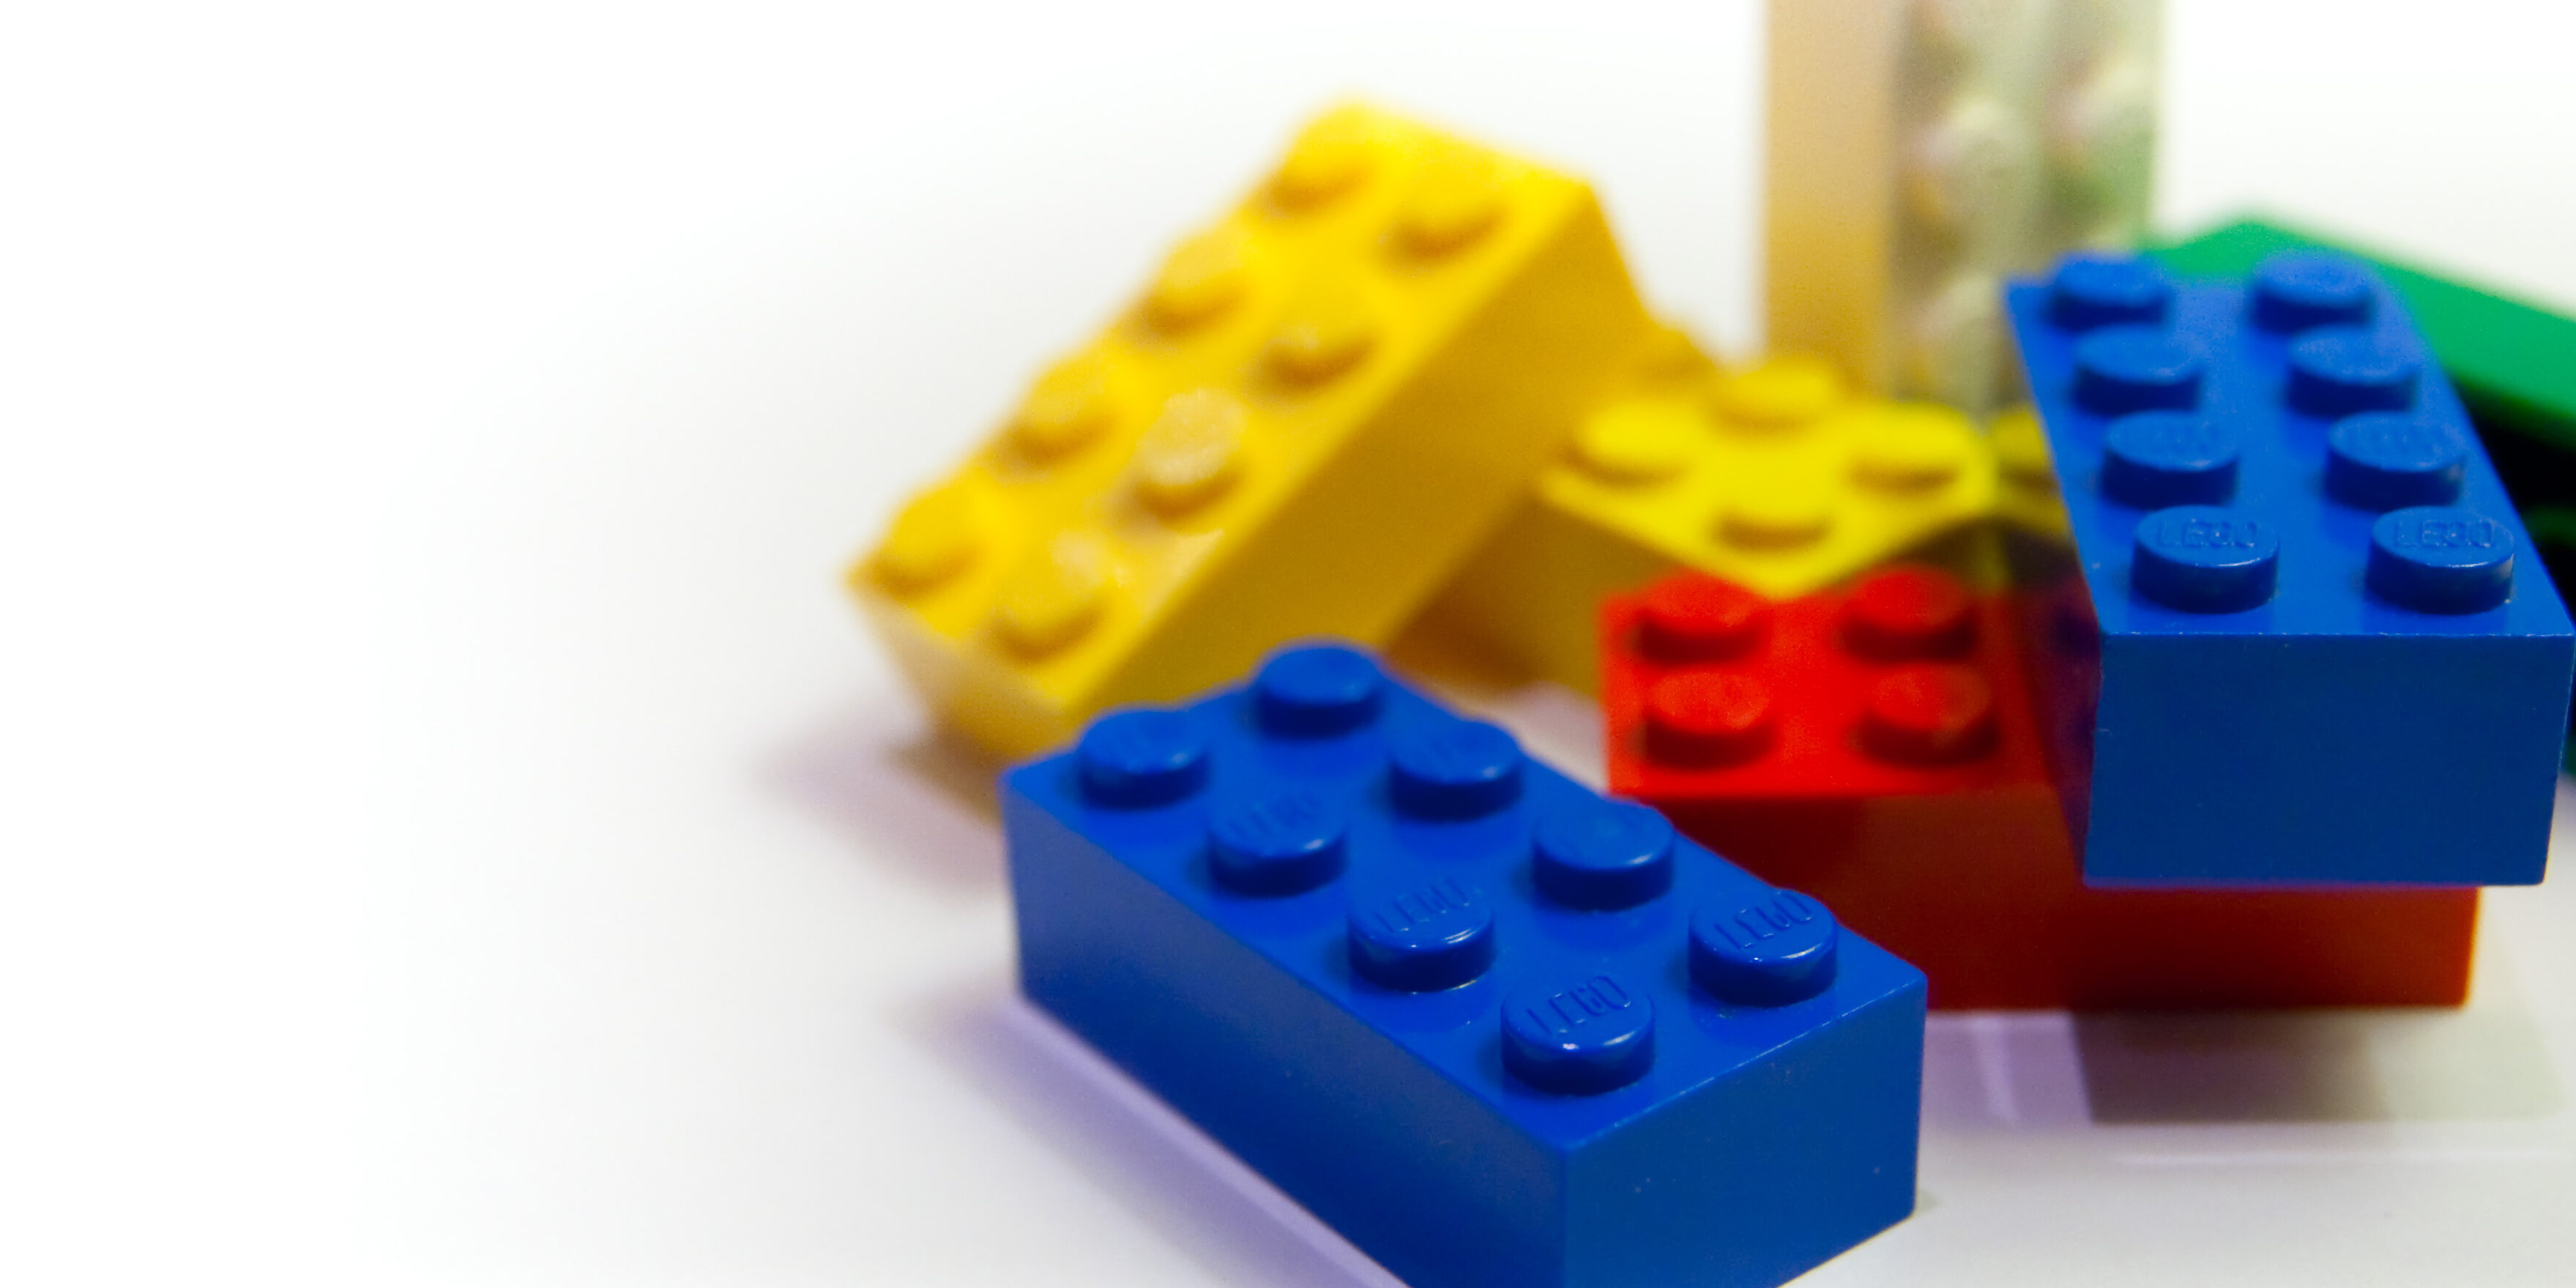 LEGO Builders